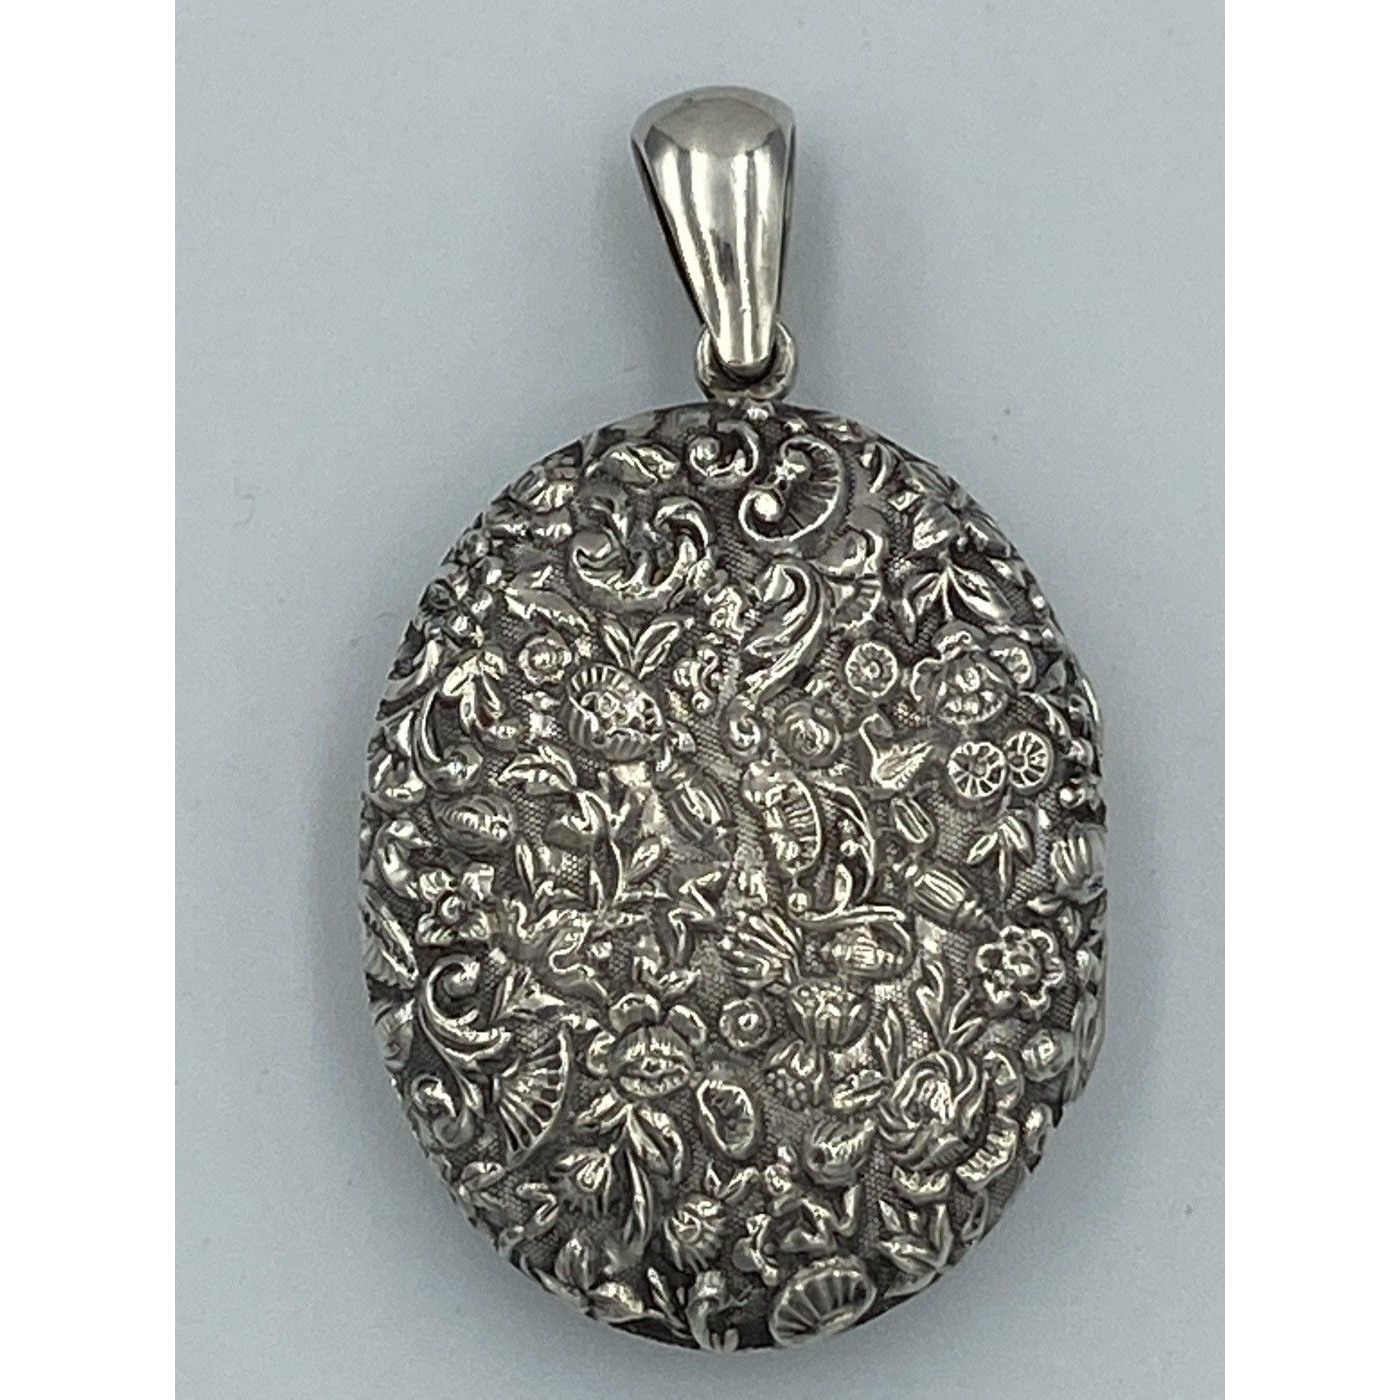 Elaborately Detailed, Deeply Engraved Seashell Theme Antique English Silver Locket